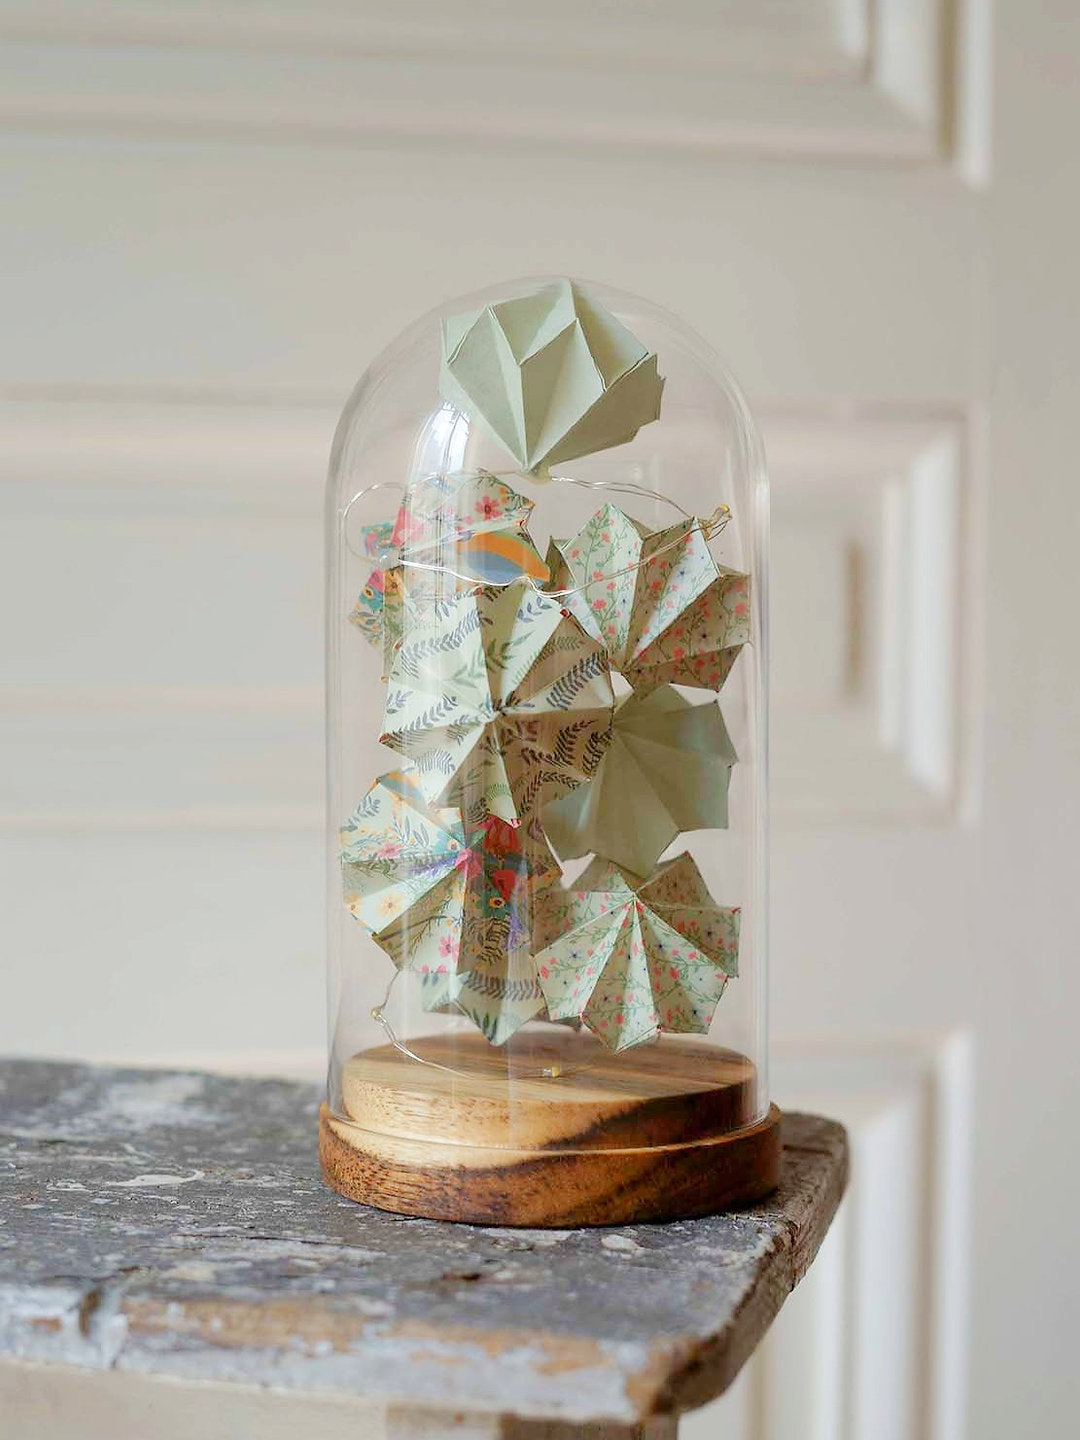 Large glass bell - Origami diamond light garland - Anise